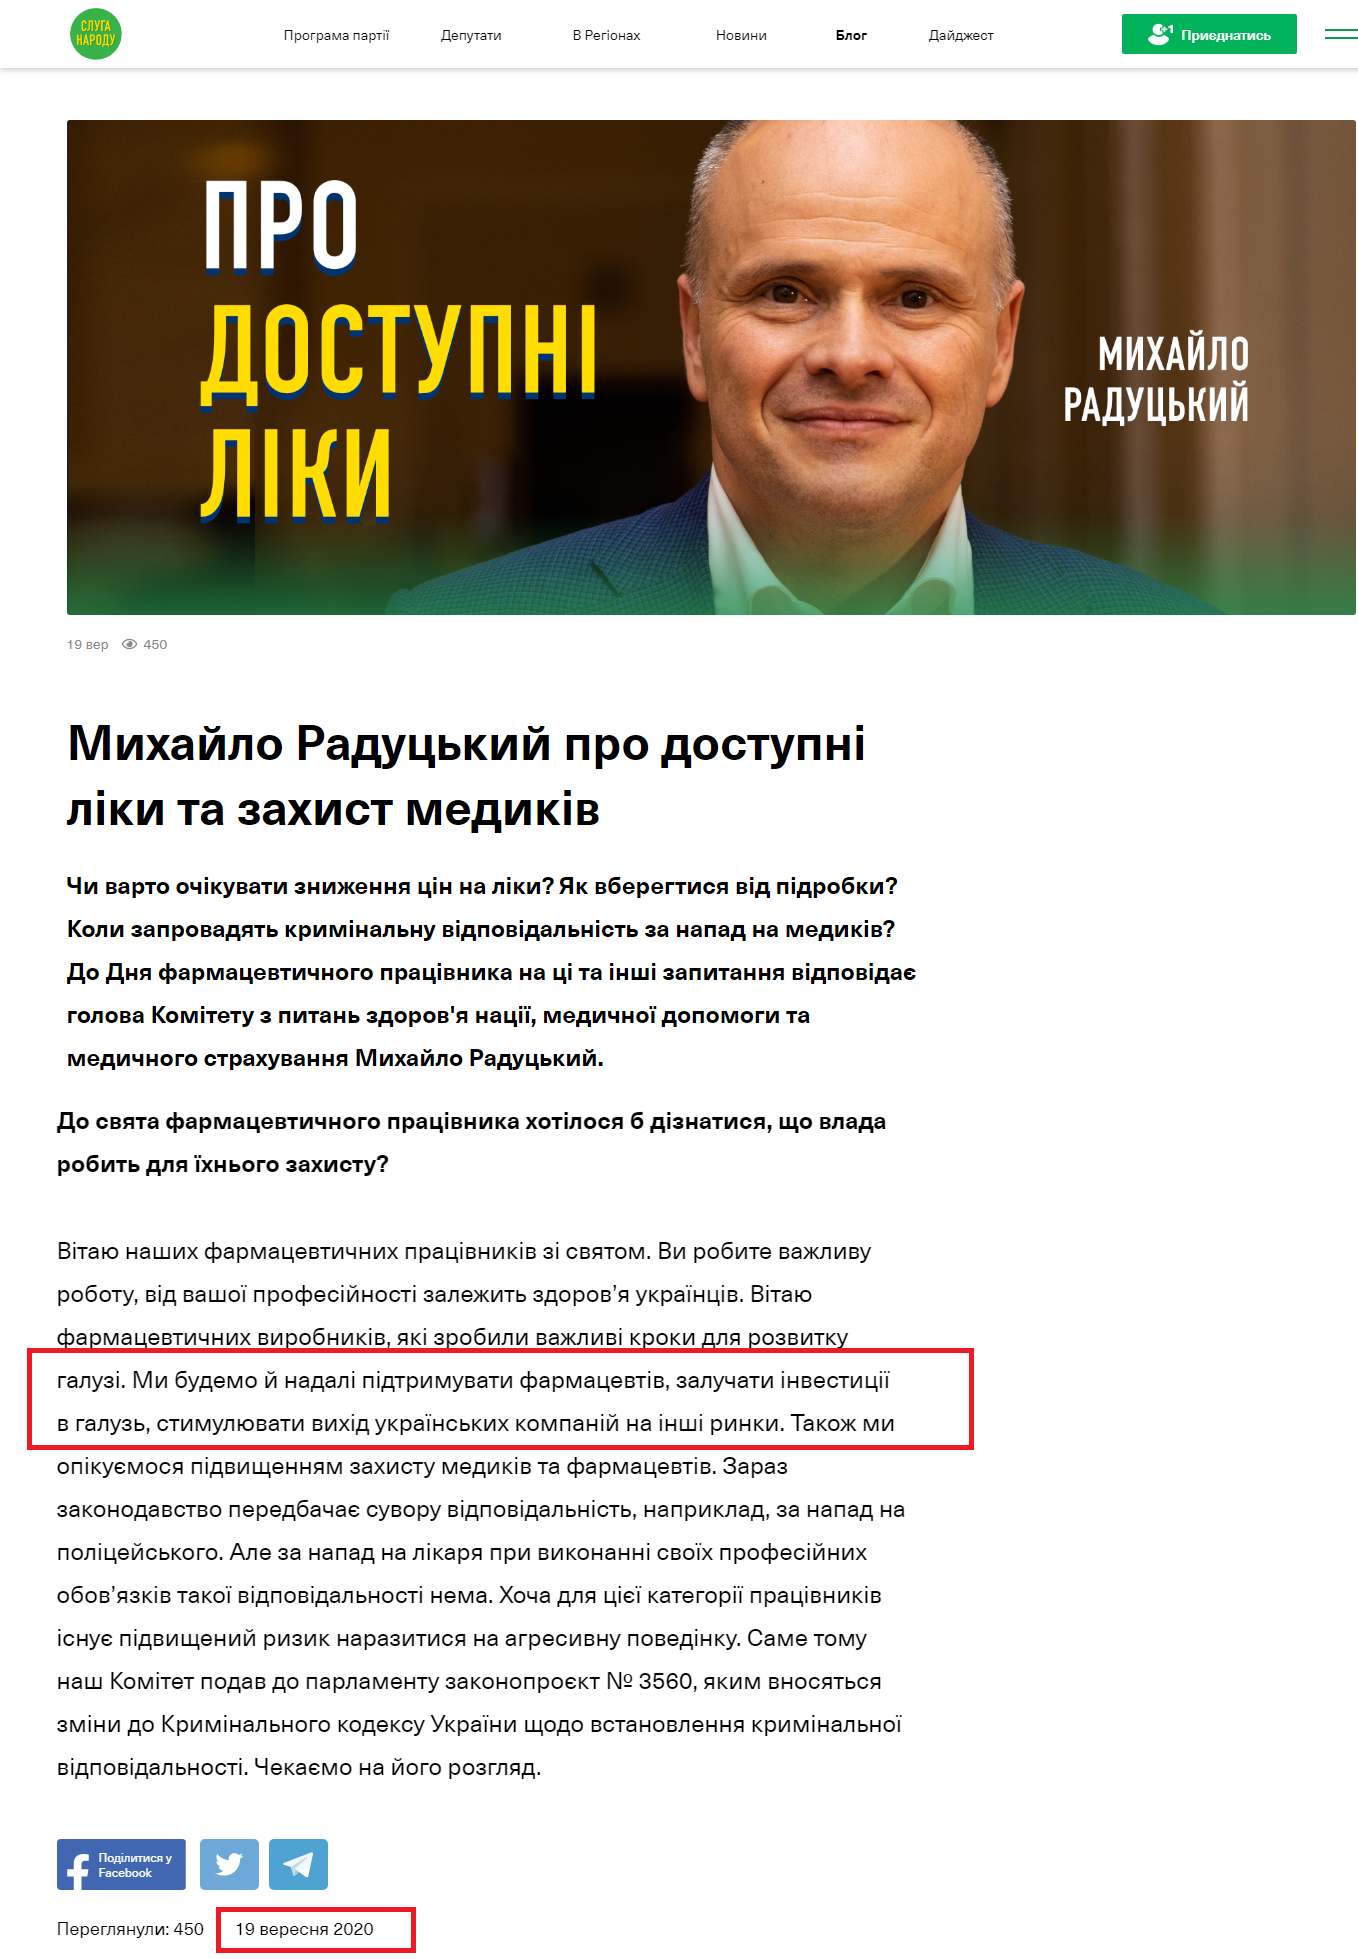 https://sluga-narodu.com/blog/mikhajlo-raduczkij-pro-dostupni-liki-ta-zakhist-medikiv